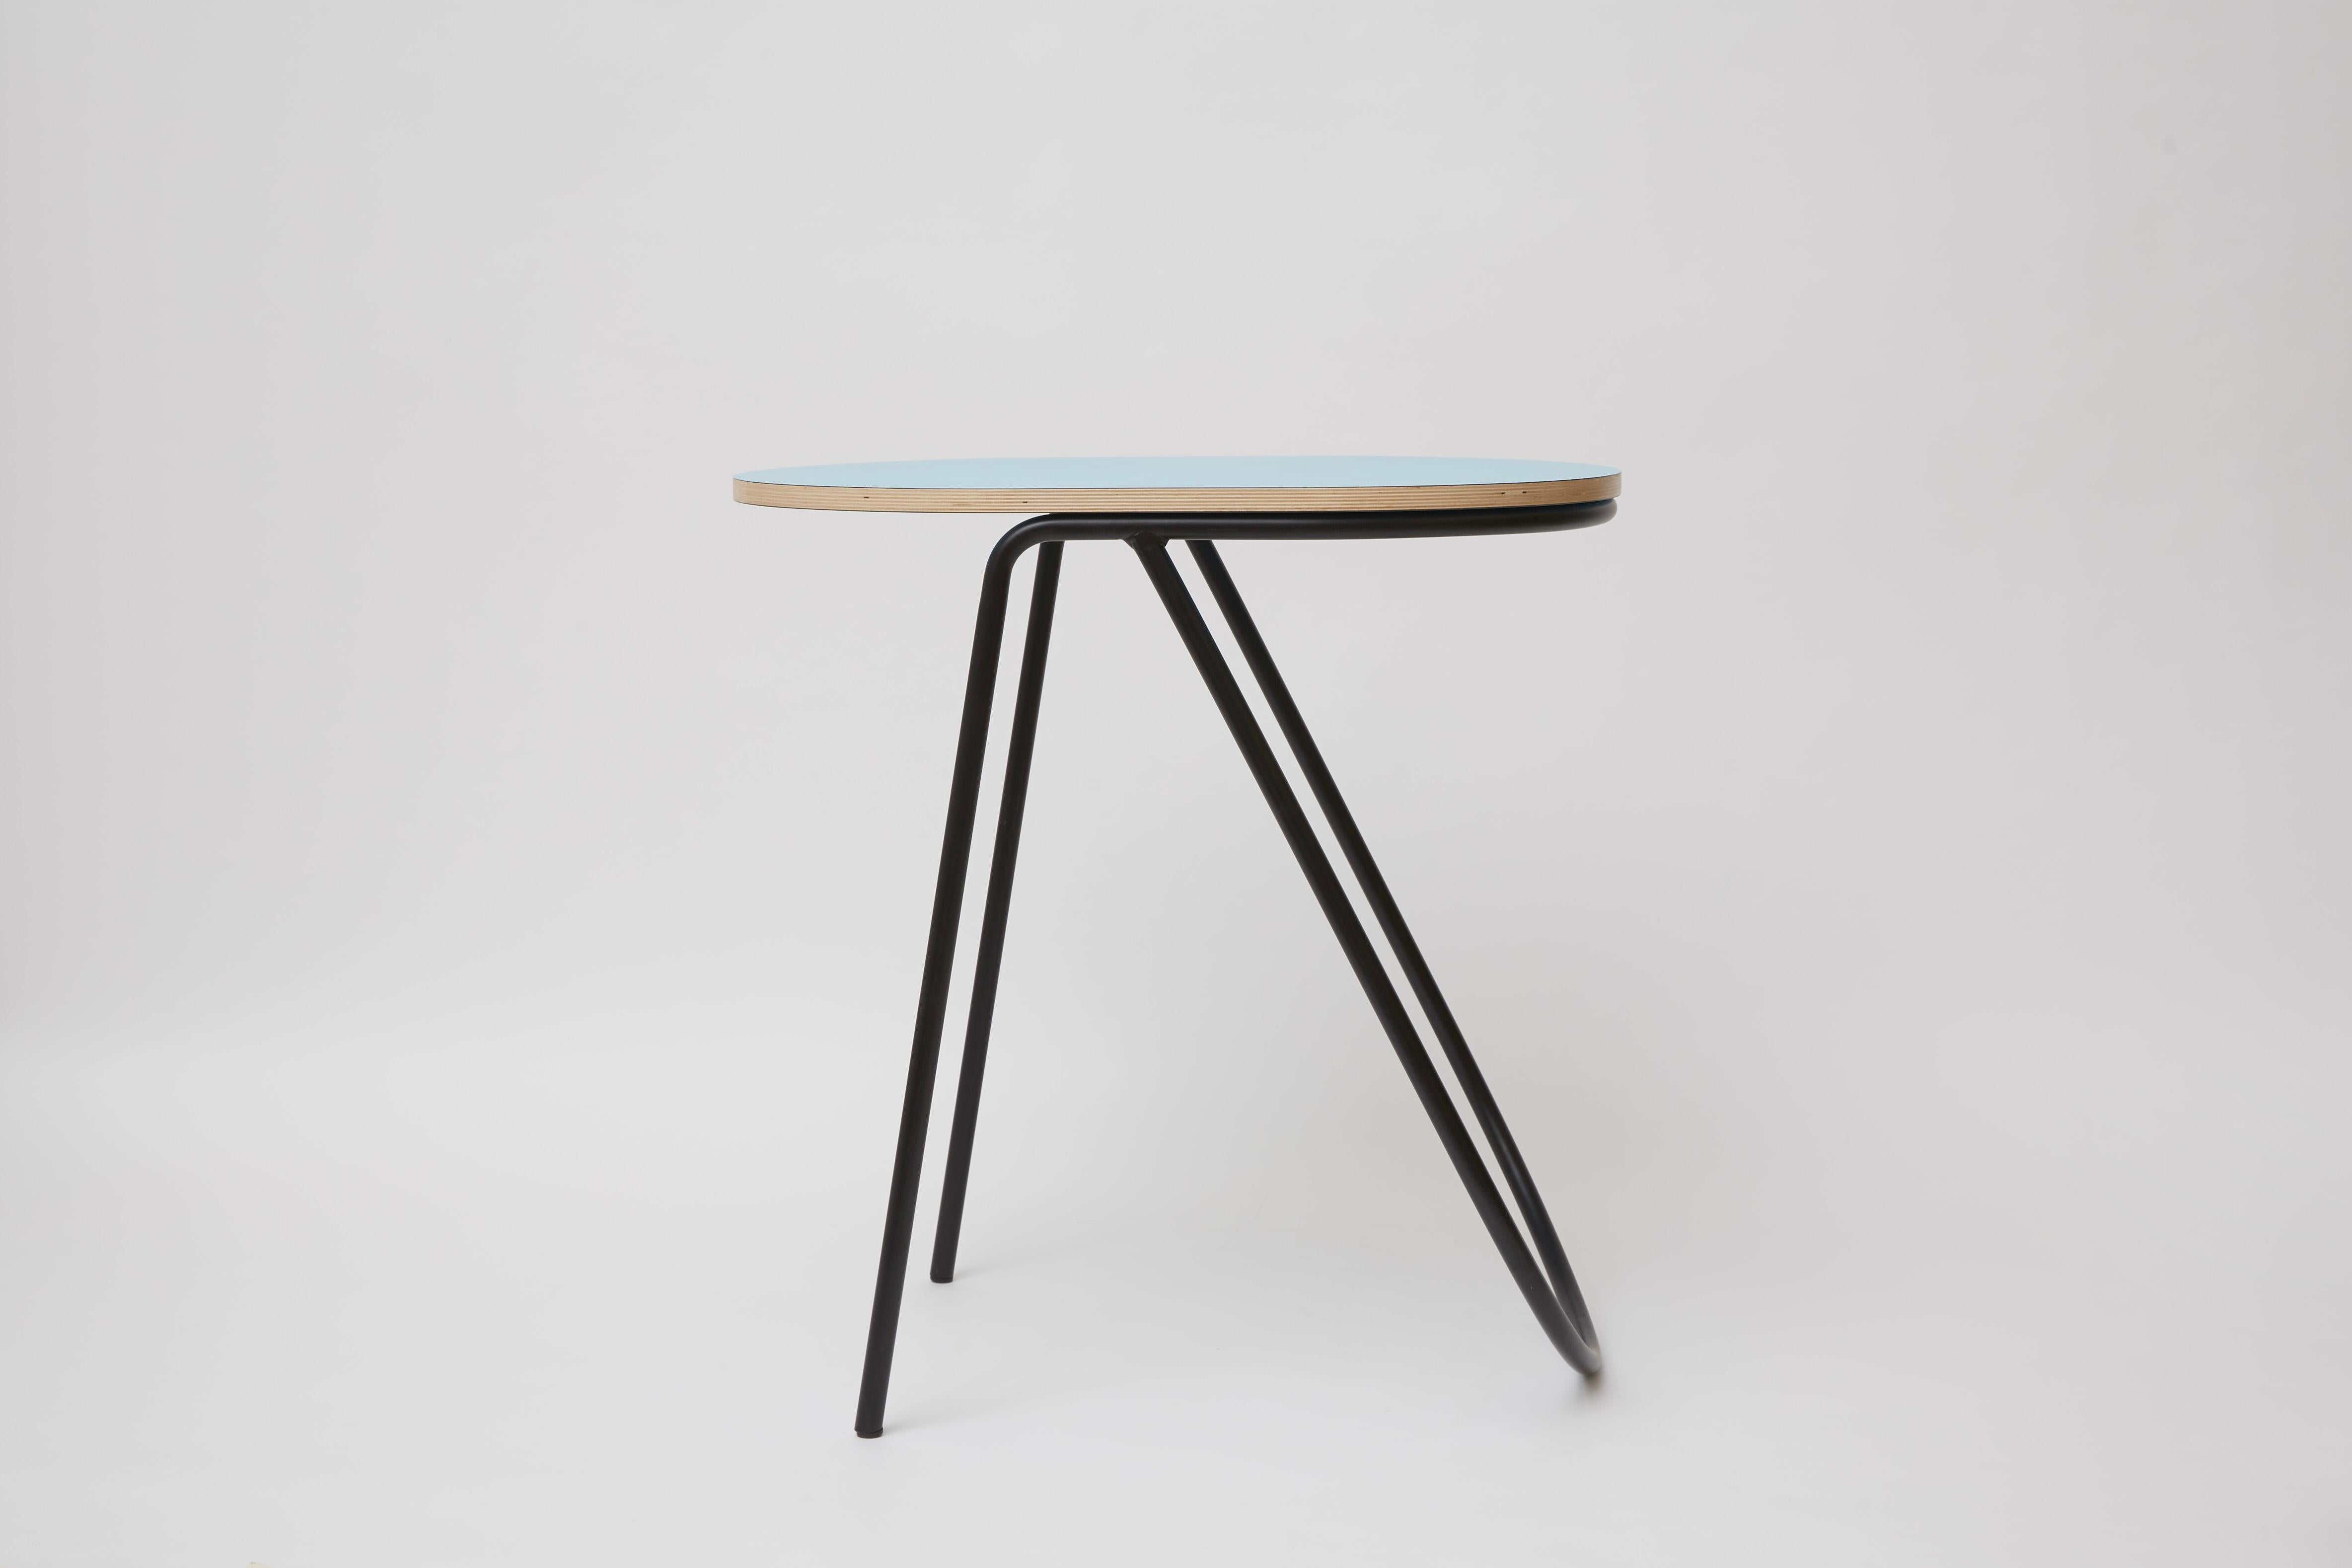 Steel La Misciù Side Table, Black, Light Blue & Light Wood For Sale